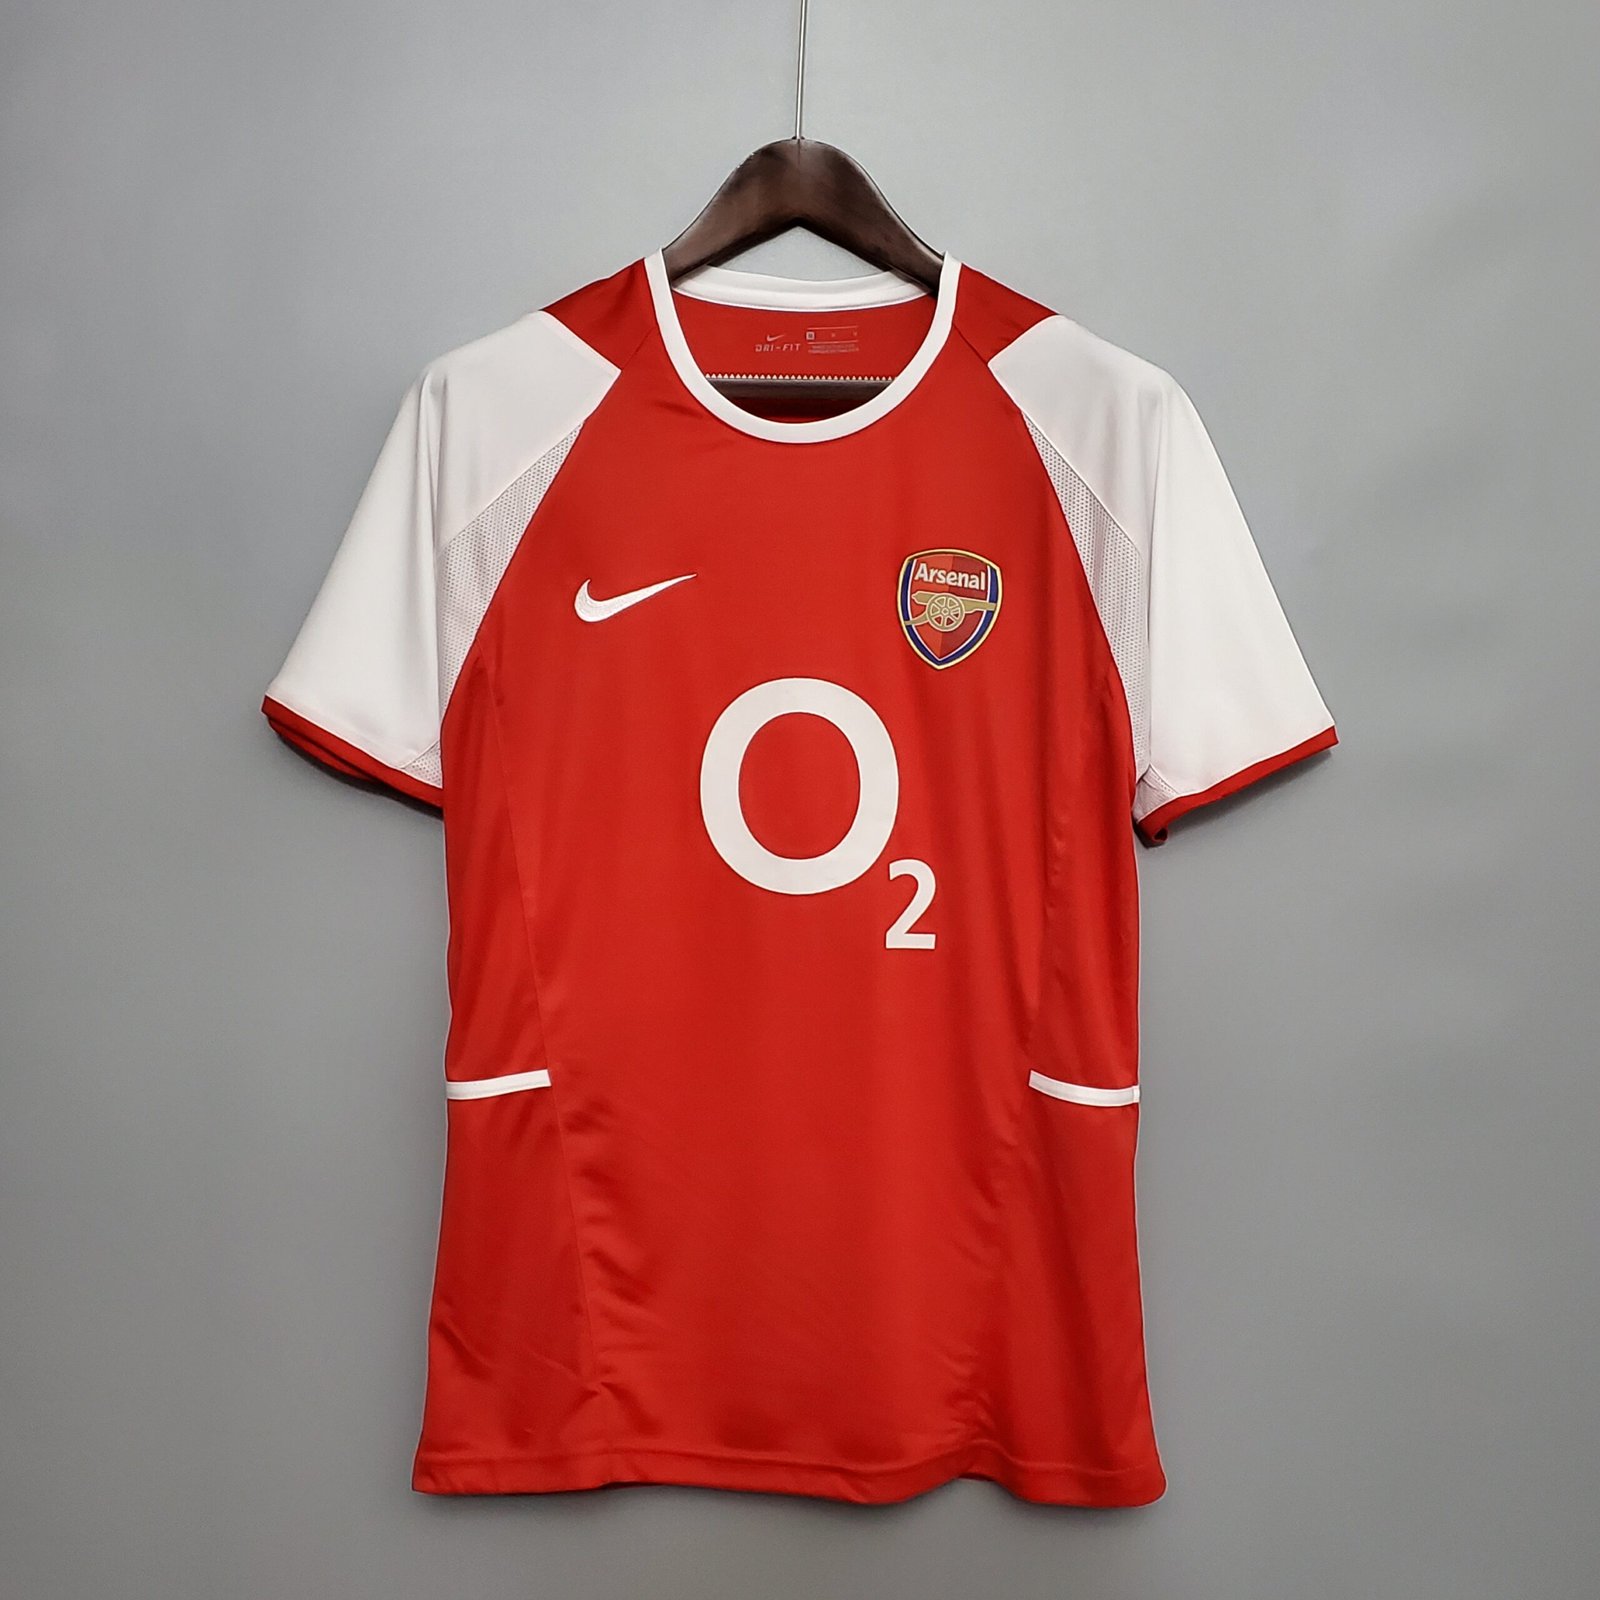 Camiseta Camisa Futebol Arsenal F.c. Time Envio Hoje 03